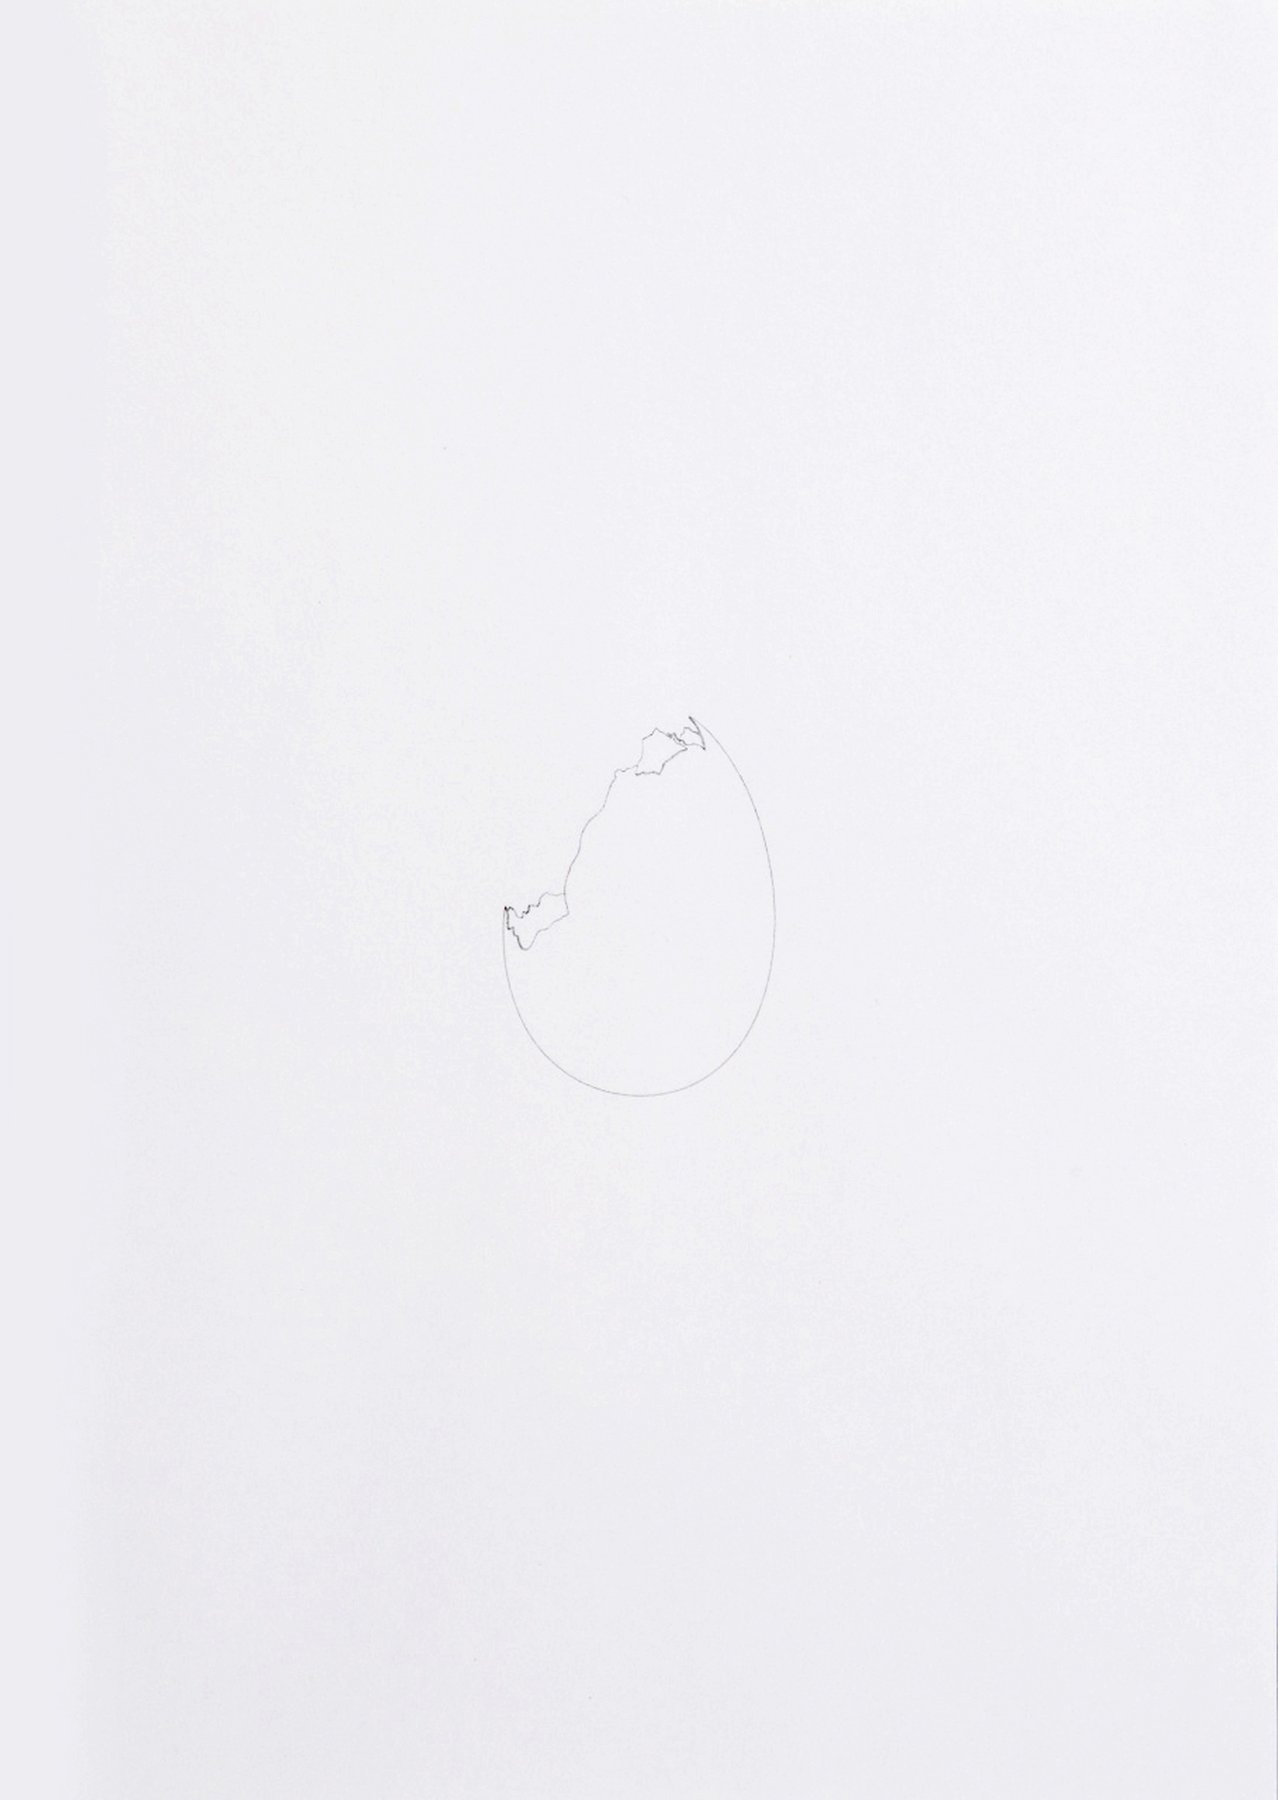 Giovanni De Lazzari Untitled, 2011 pencil on paper(series of 3 drawings) 22 × 30 cm; Trittico/triptych